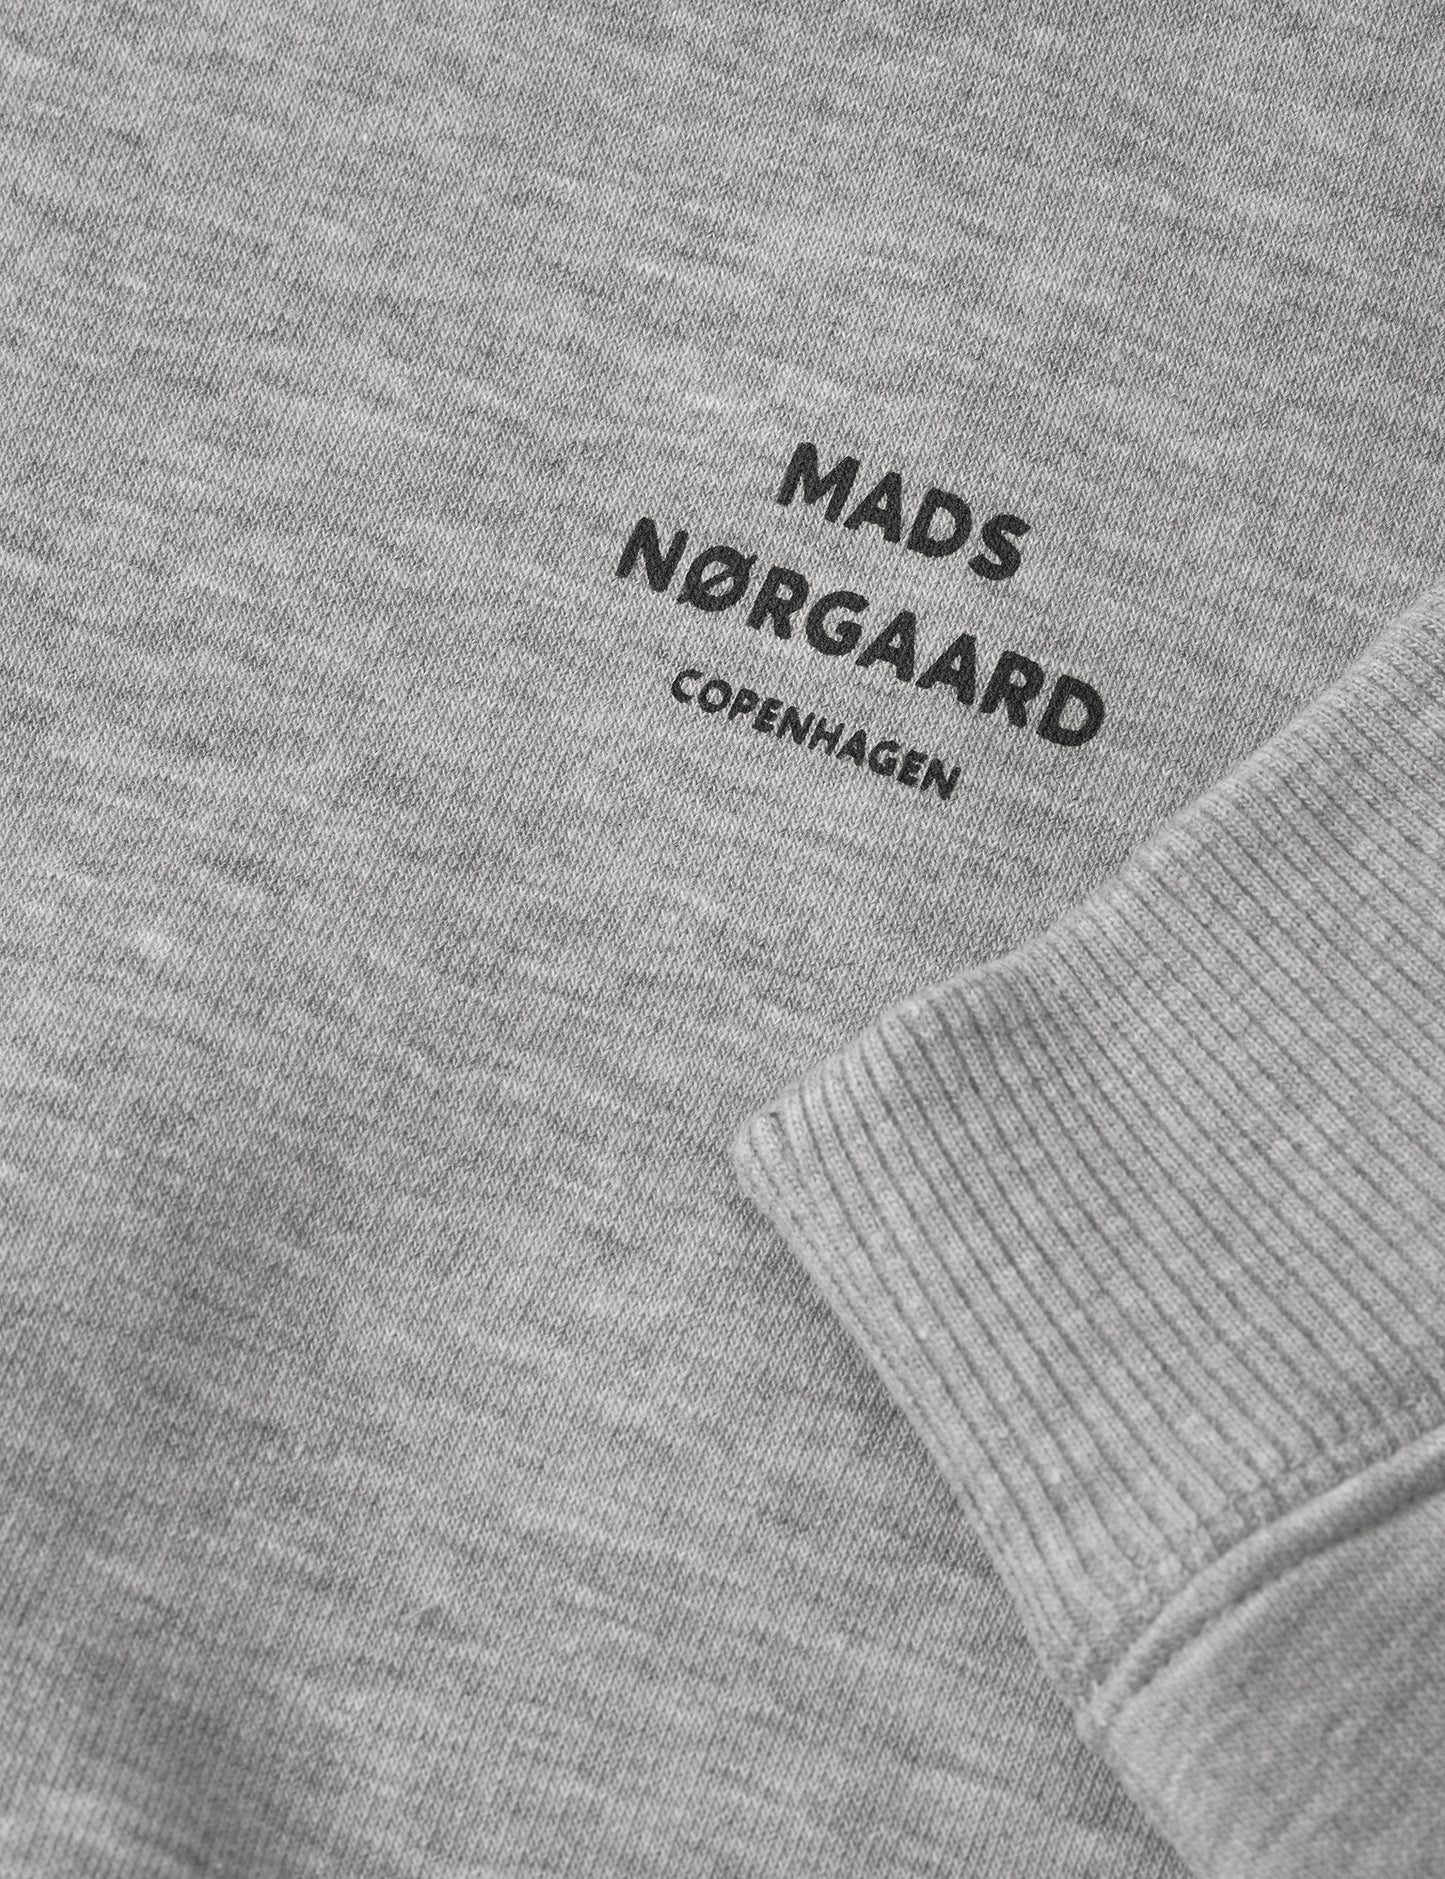 Standard Hudini Sweatshirt, Grey Melange